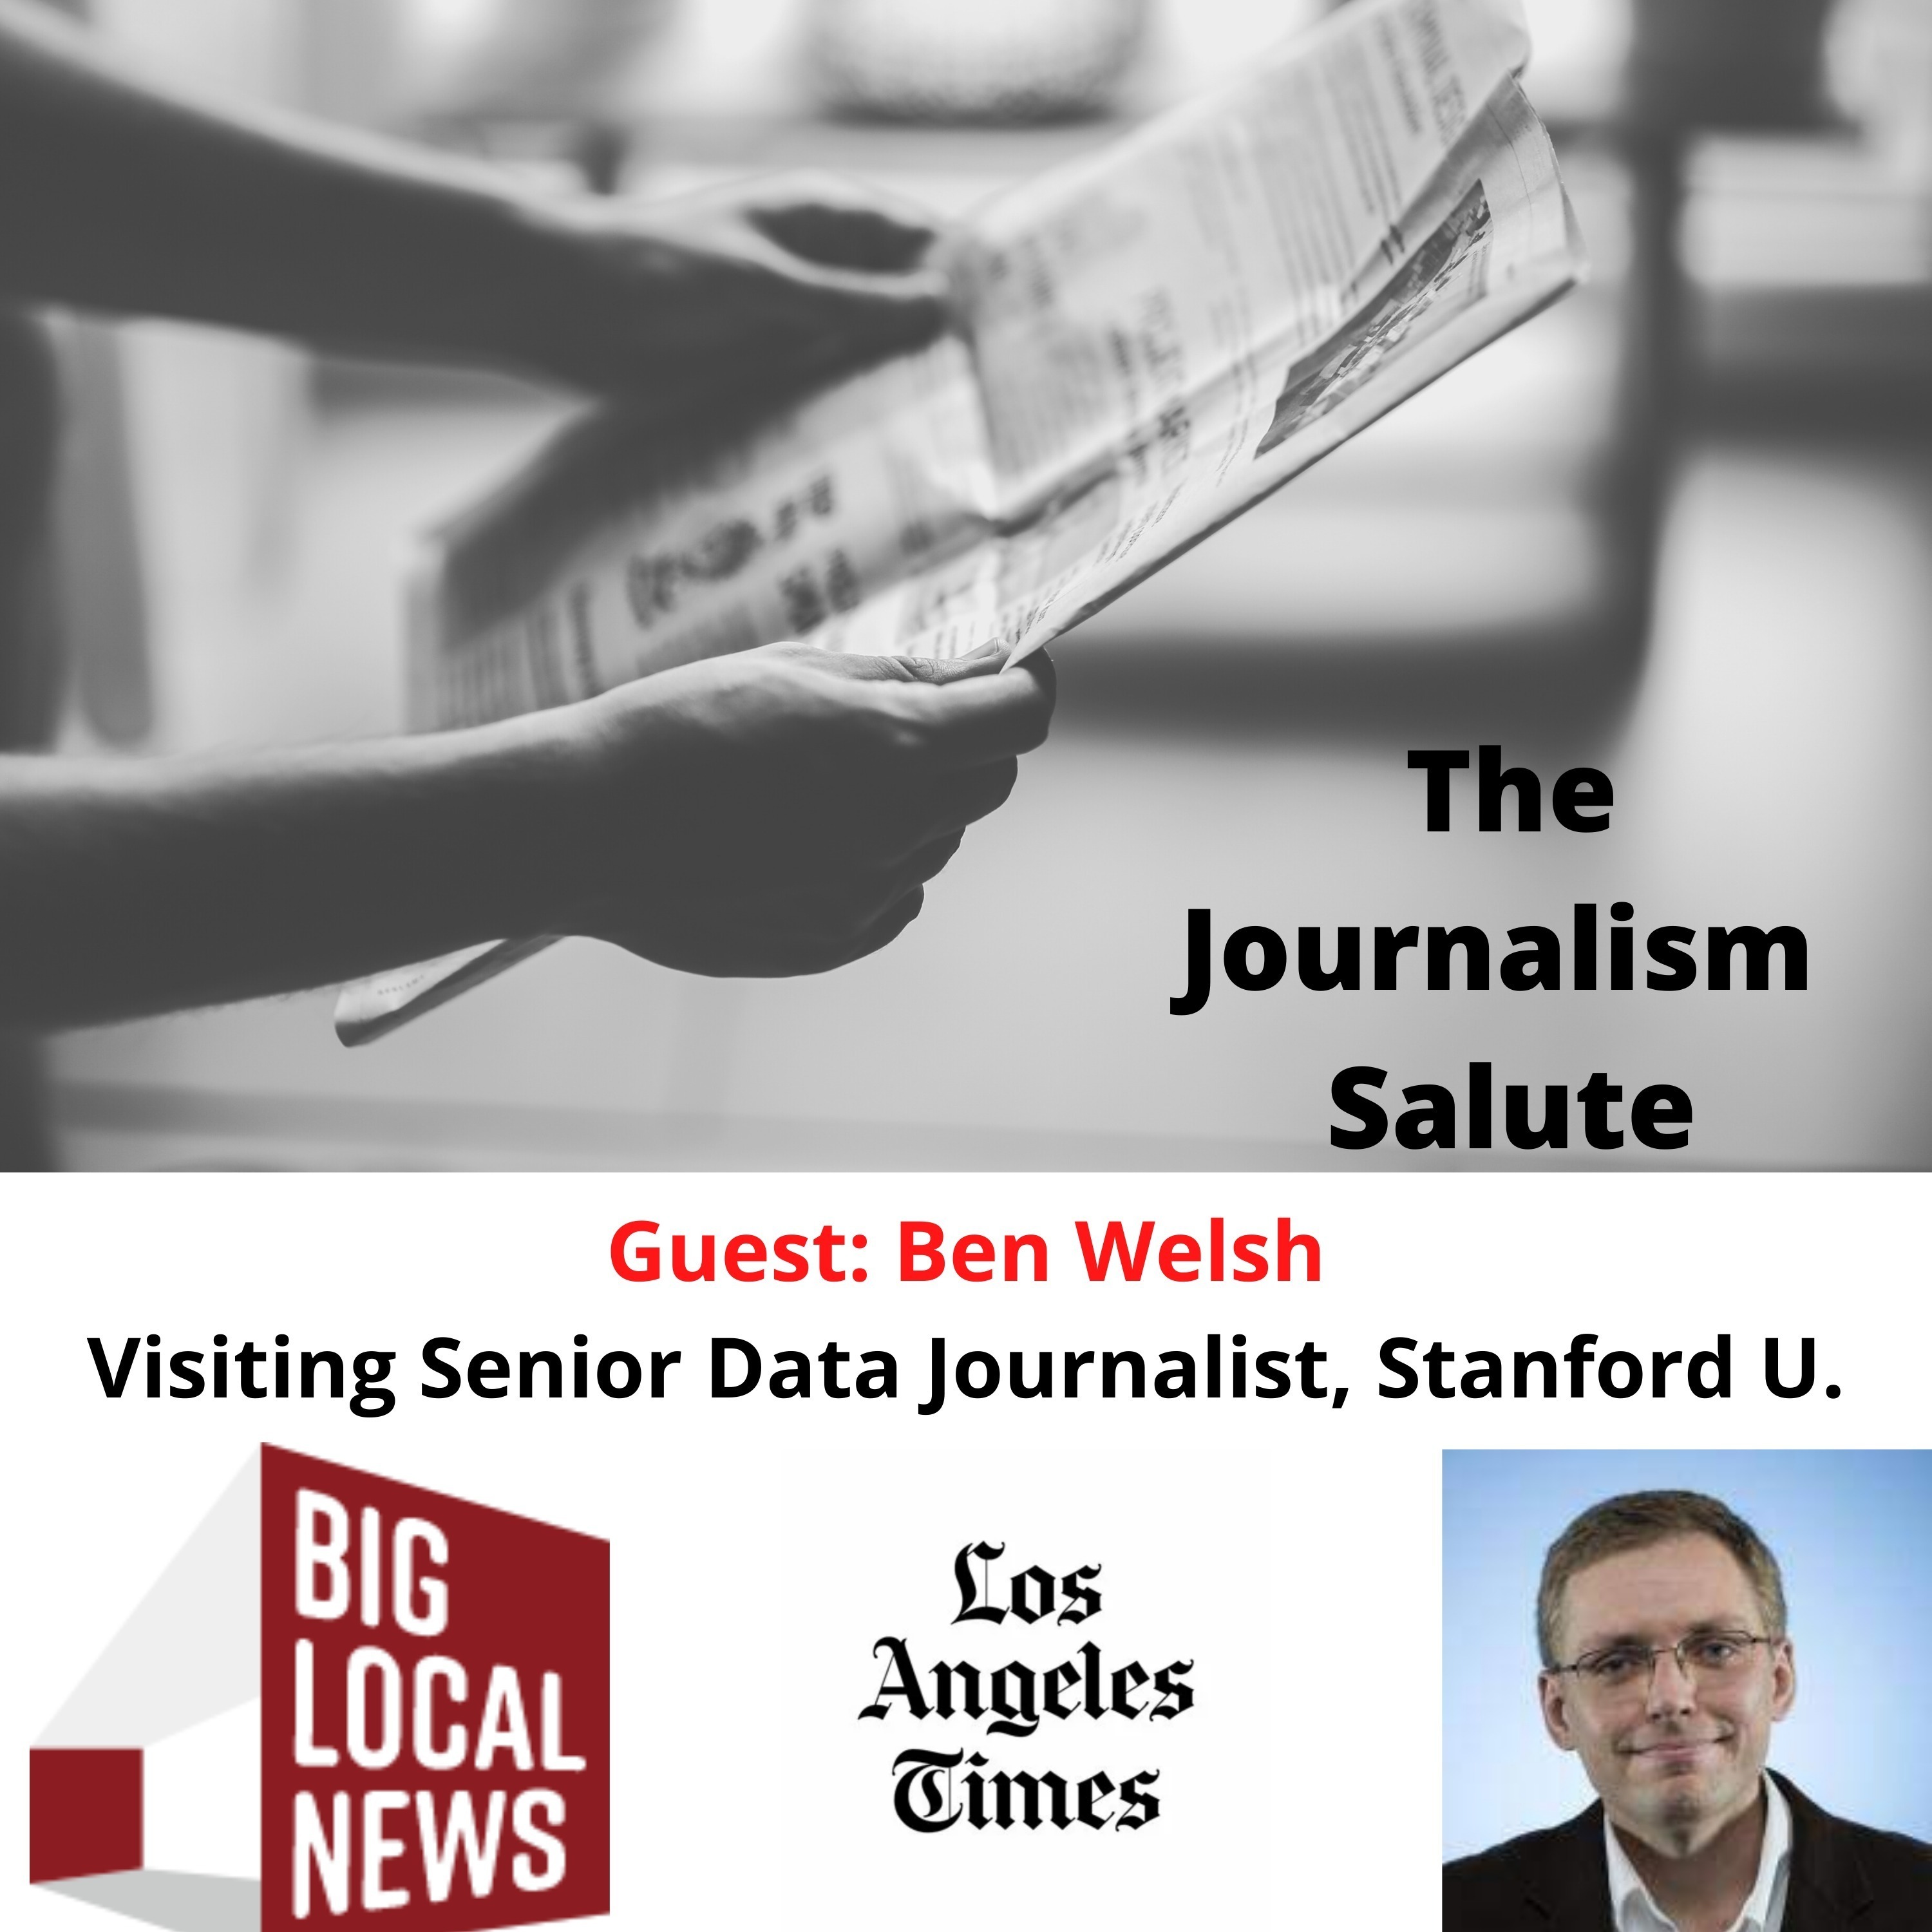 Ben Welsh, Visiting Senior Data Journalist at Stanford University